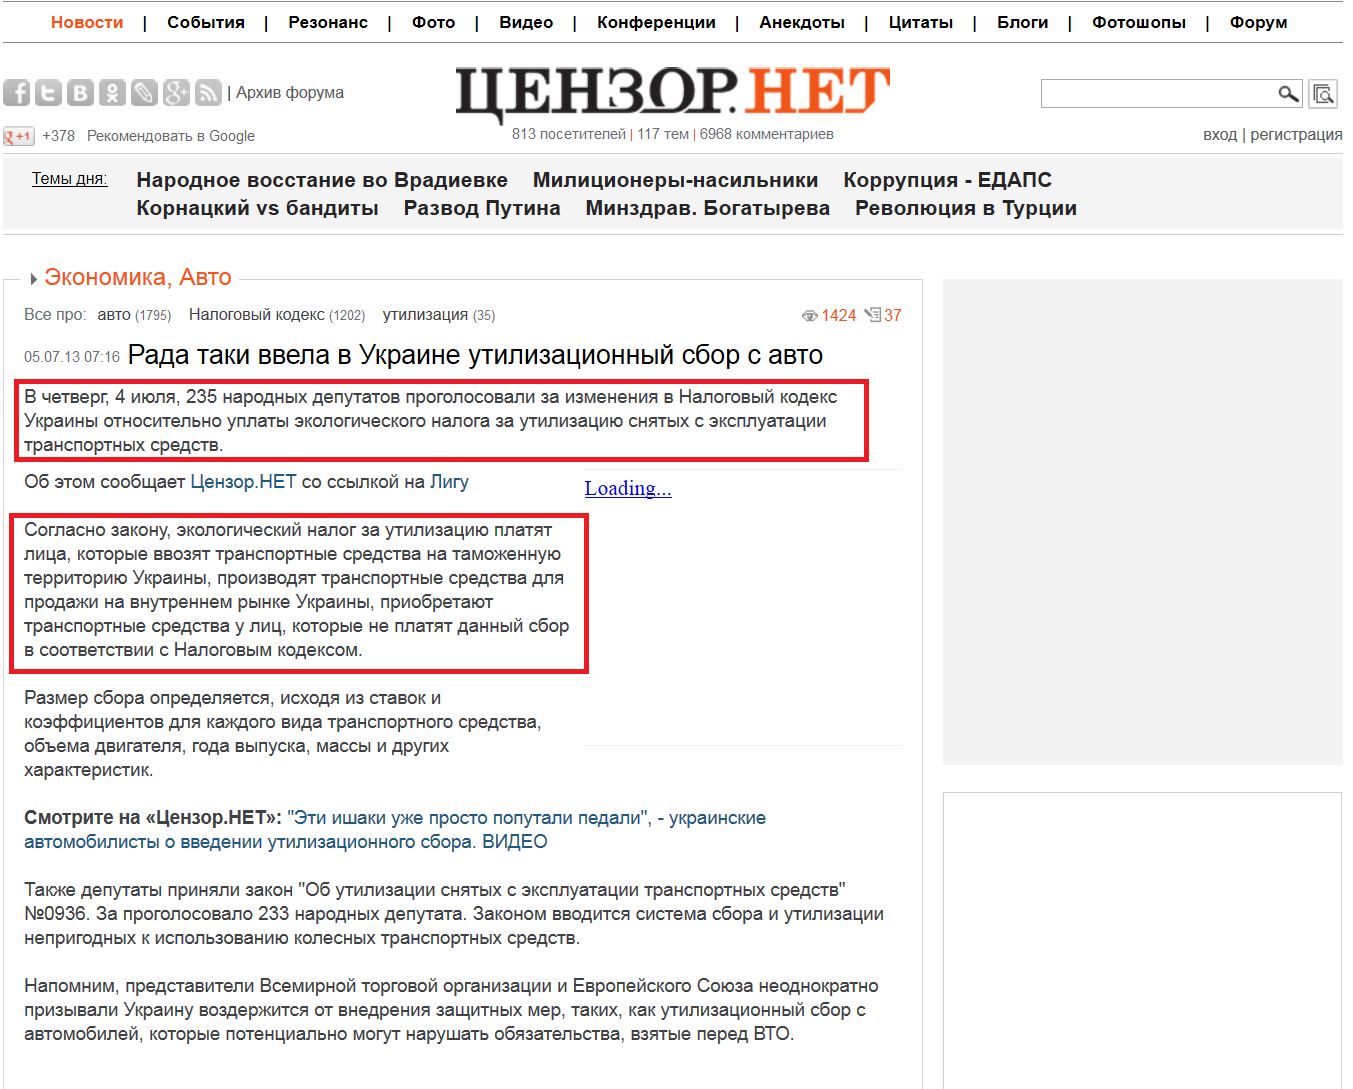 http://censor.net.ua/news/246438/rada_taki_vvela_v_ukraine_utilizatsionnyyi_sbor_s_avto